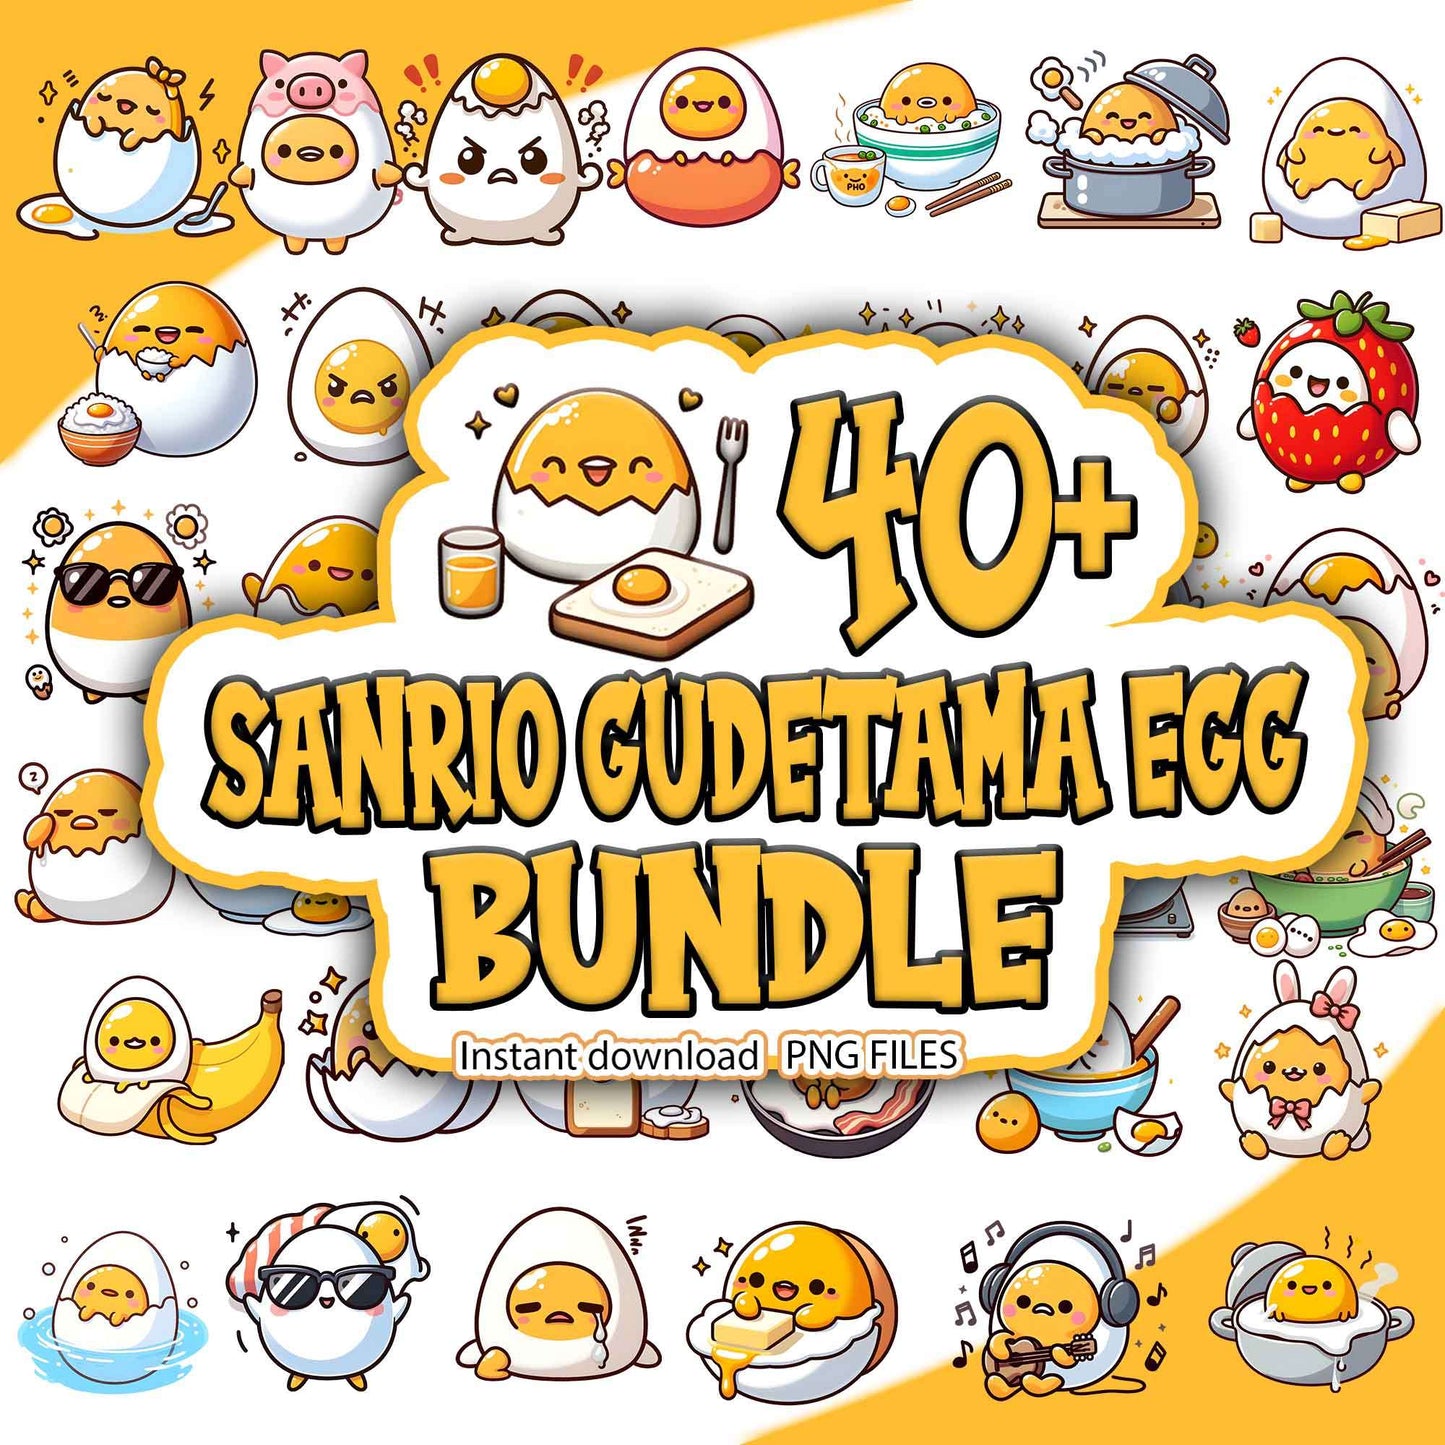 Sanrio gudetama Egg Bundle Png